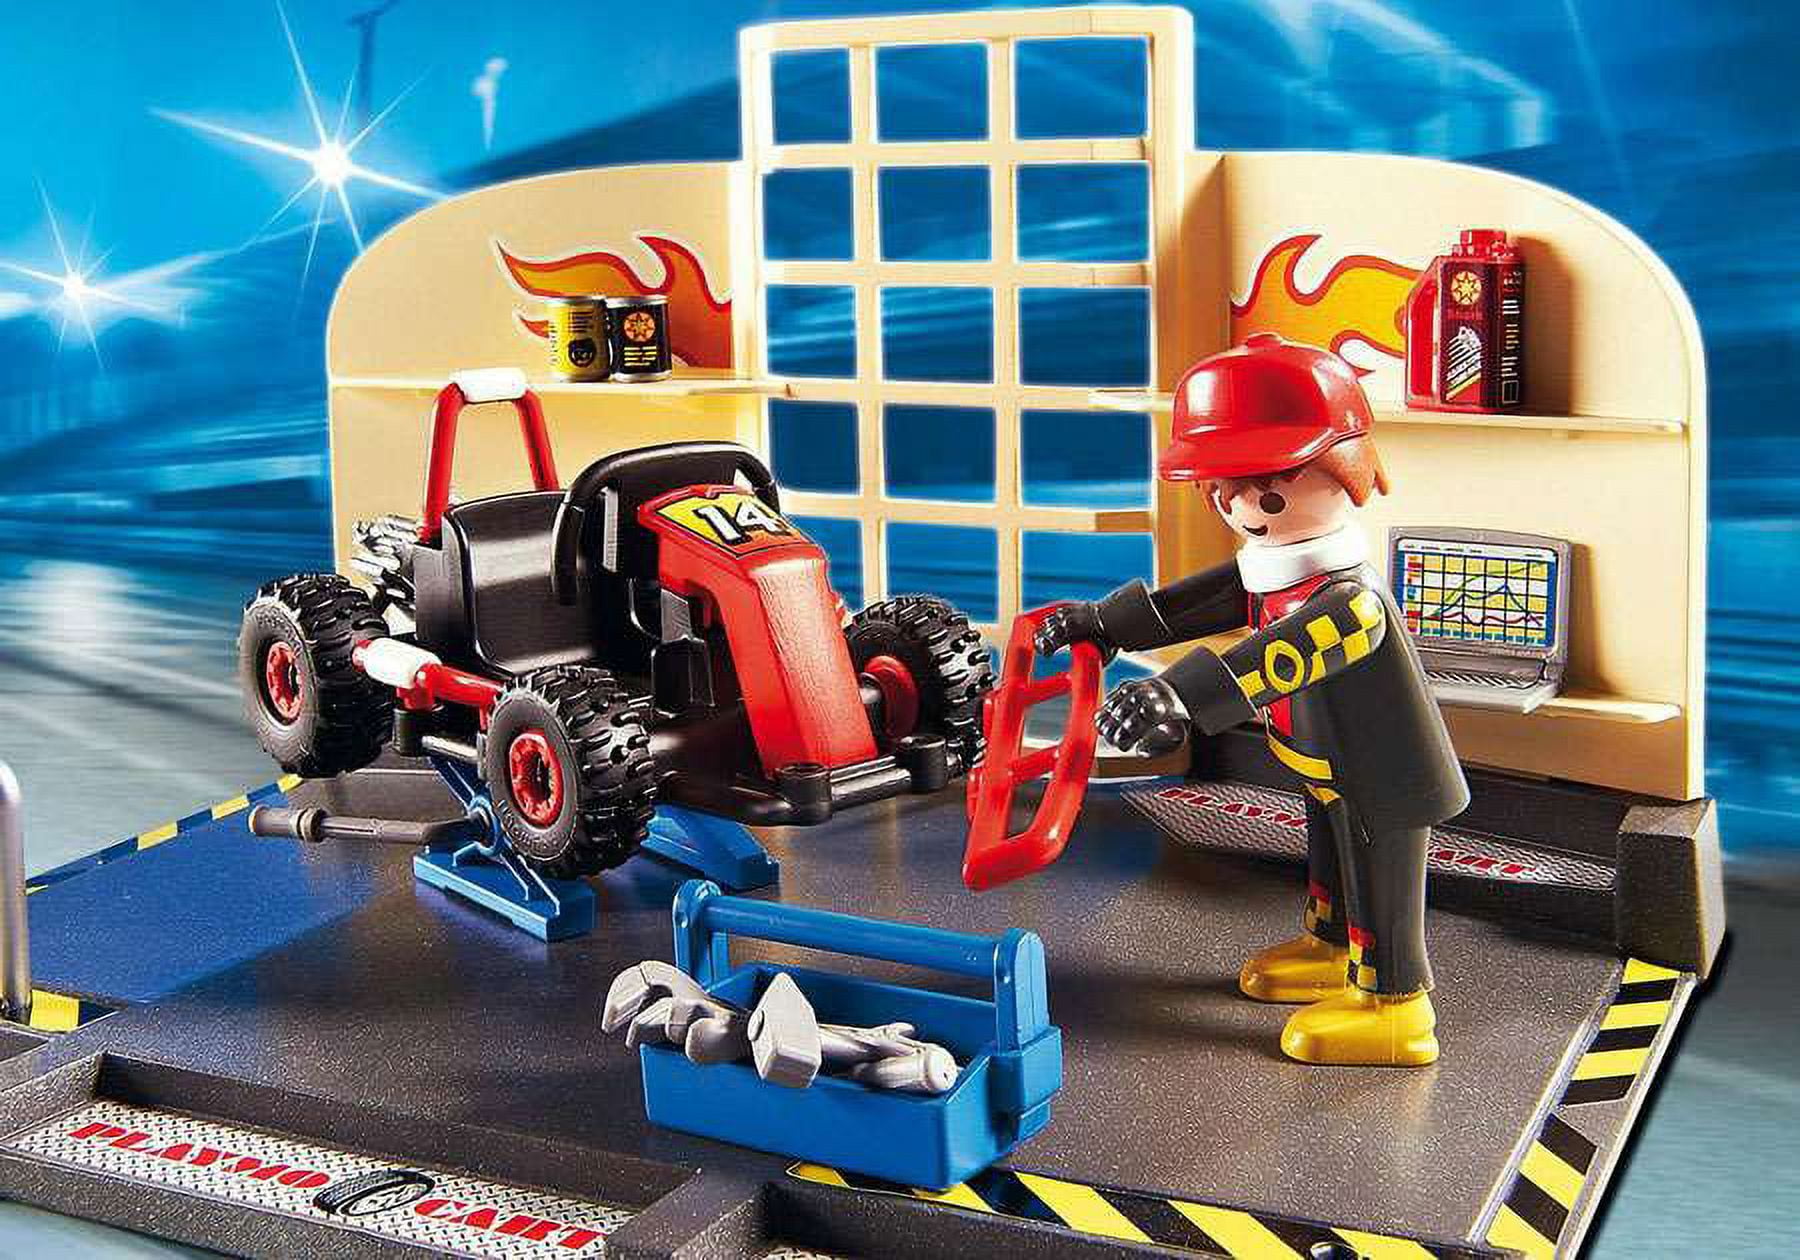 Playmobil 6869 City Action Go-Kart Garage Starter Set – toy-vs